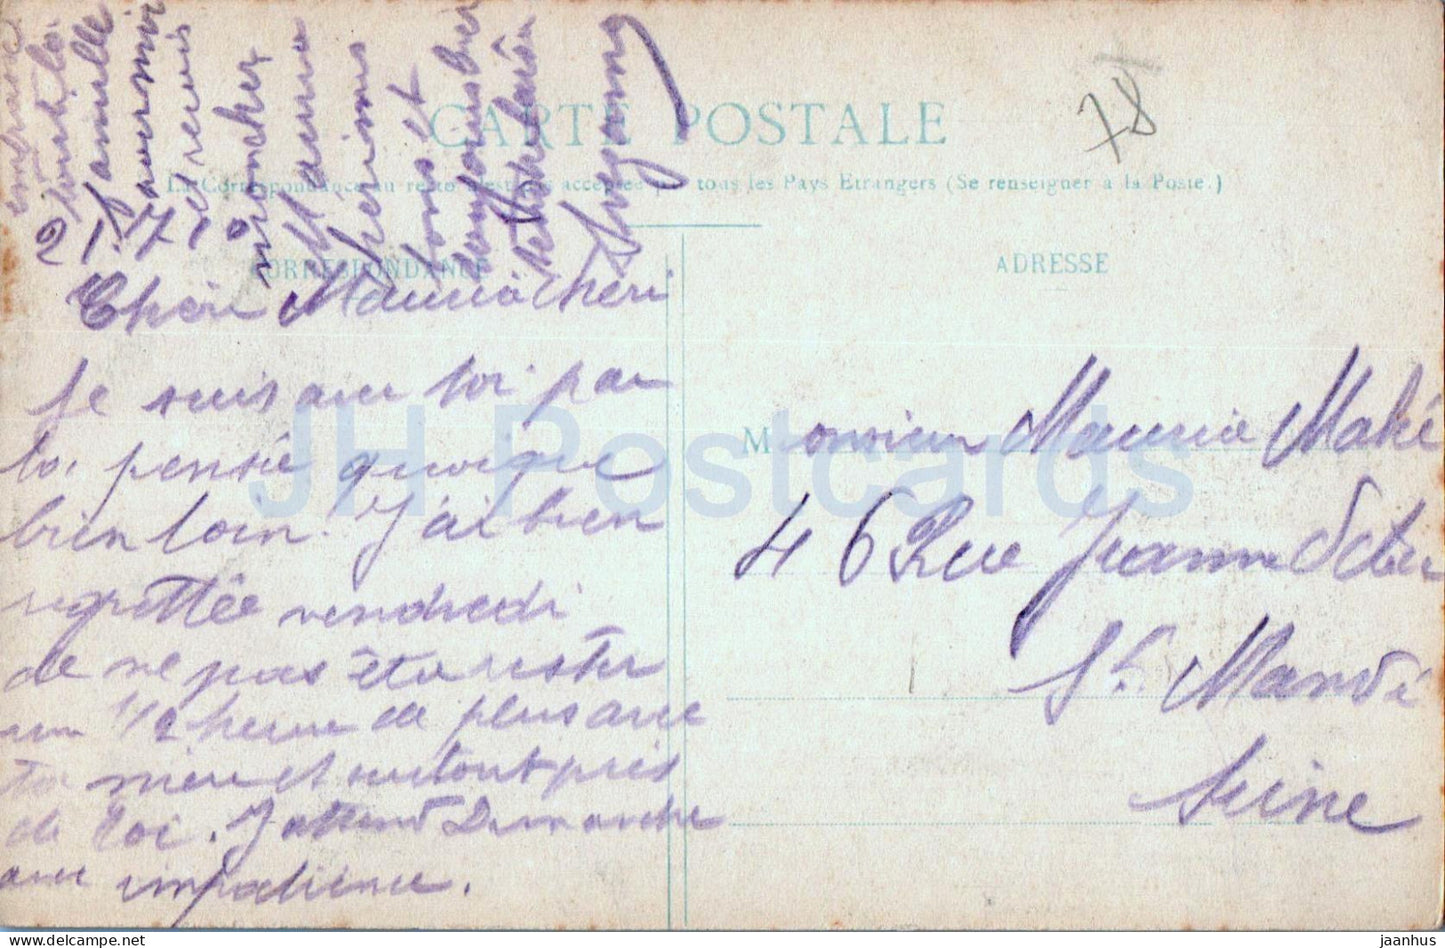 Montfort L'Amaury - Ruines du Donjon du X siecle - vue du cote de la ville - alte Postkarte - 1910 - Frankreich - gebraucht 